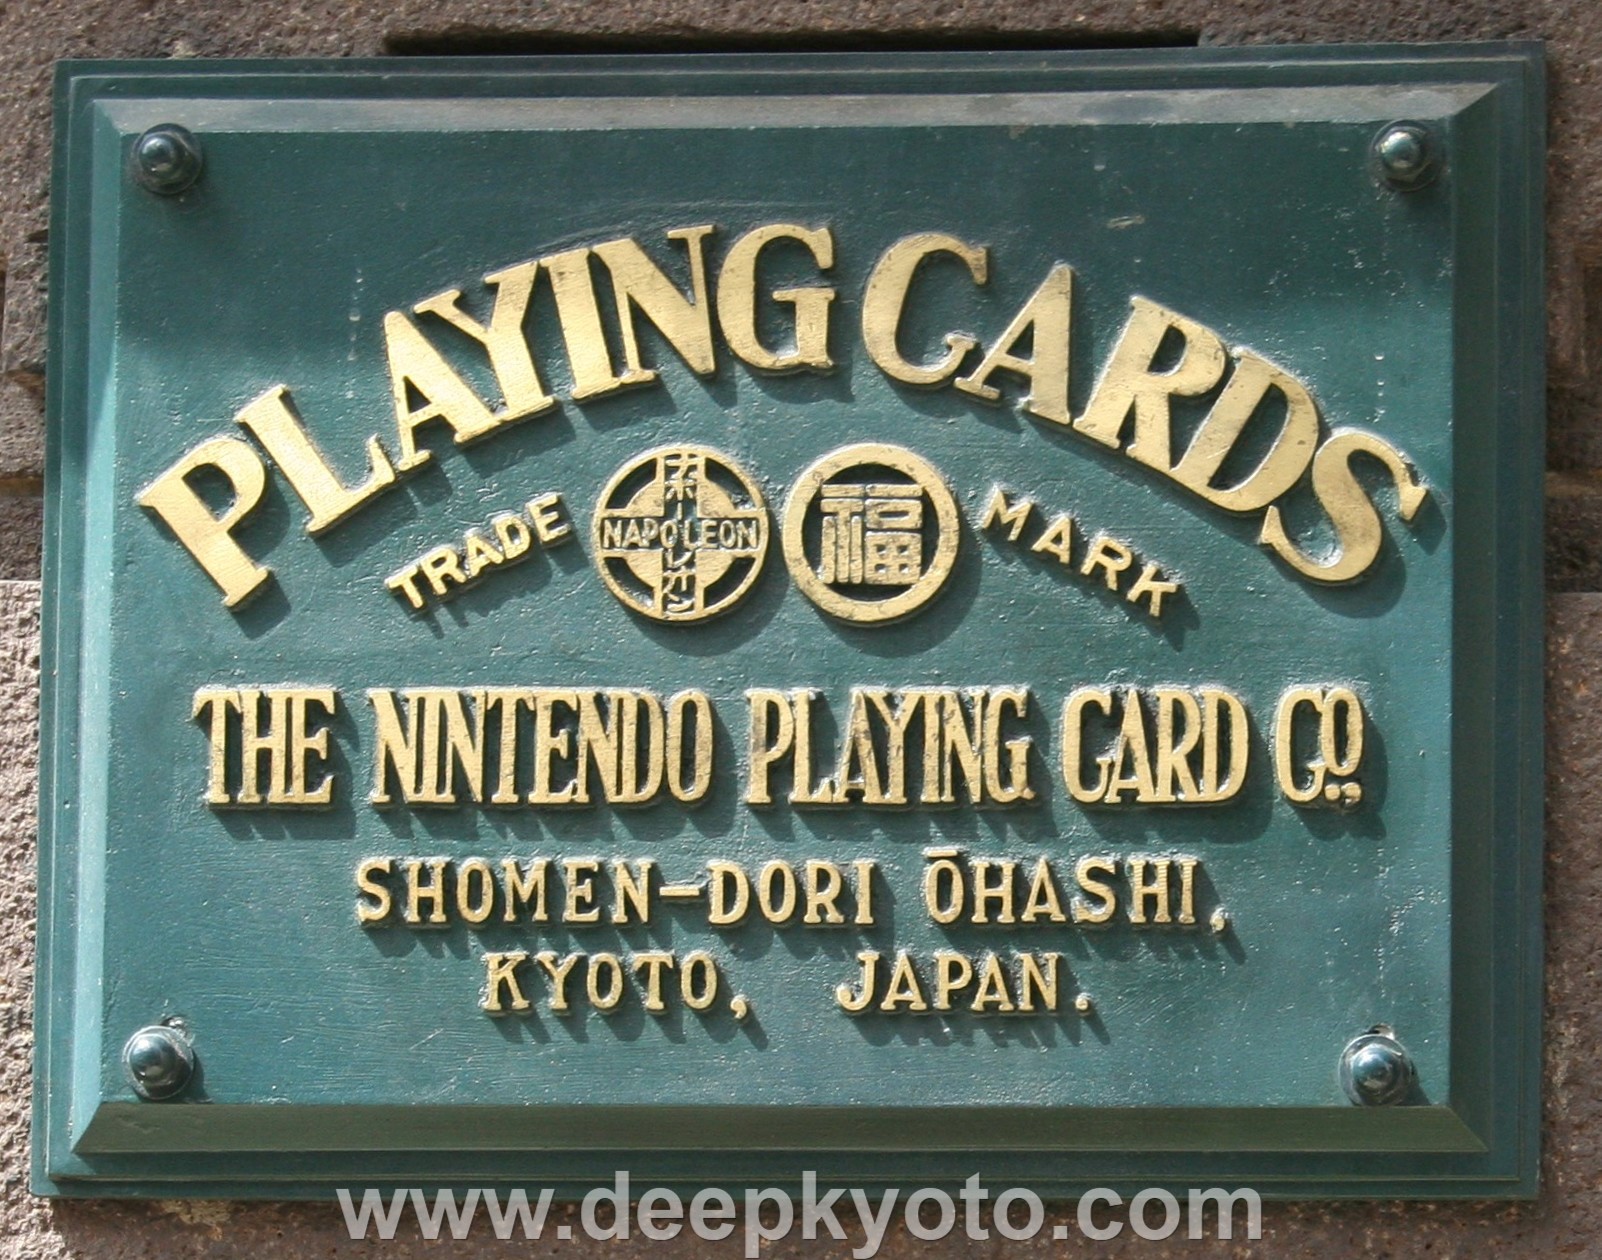 søsyge Rettidig Dyrke motion Nintendo Playing Cards - Deep Kyoto